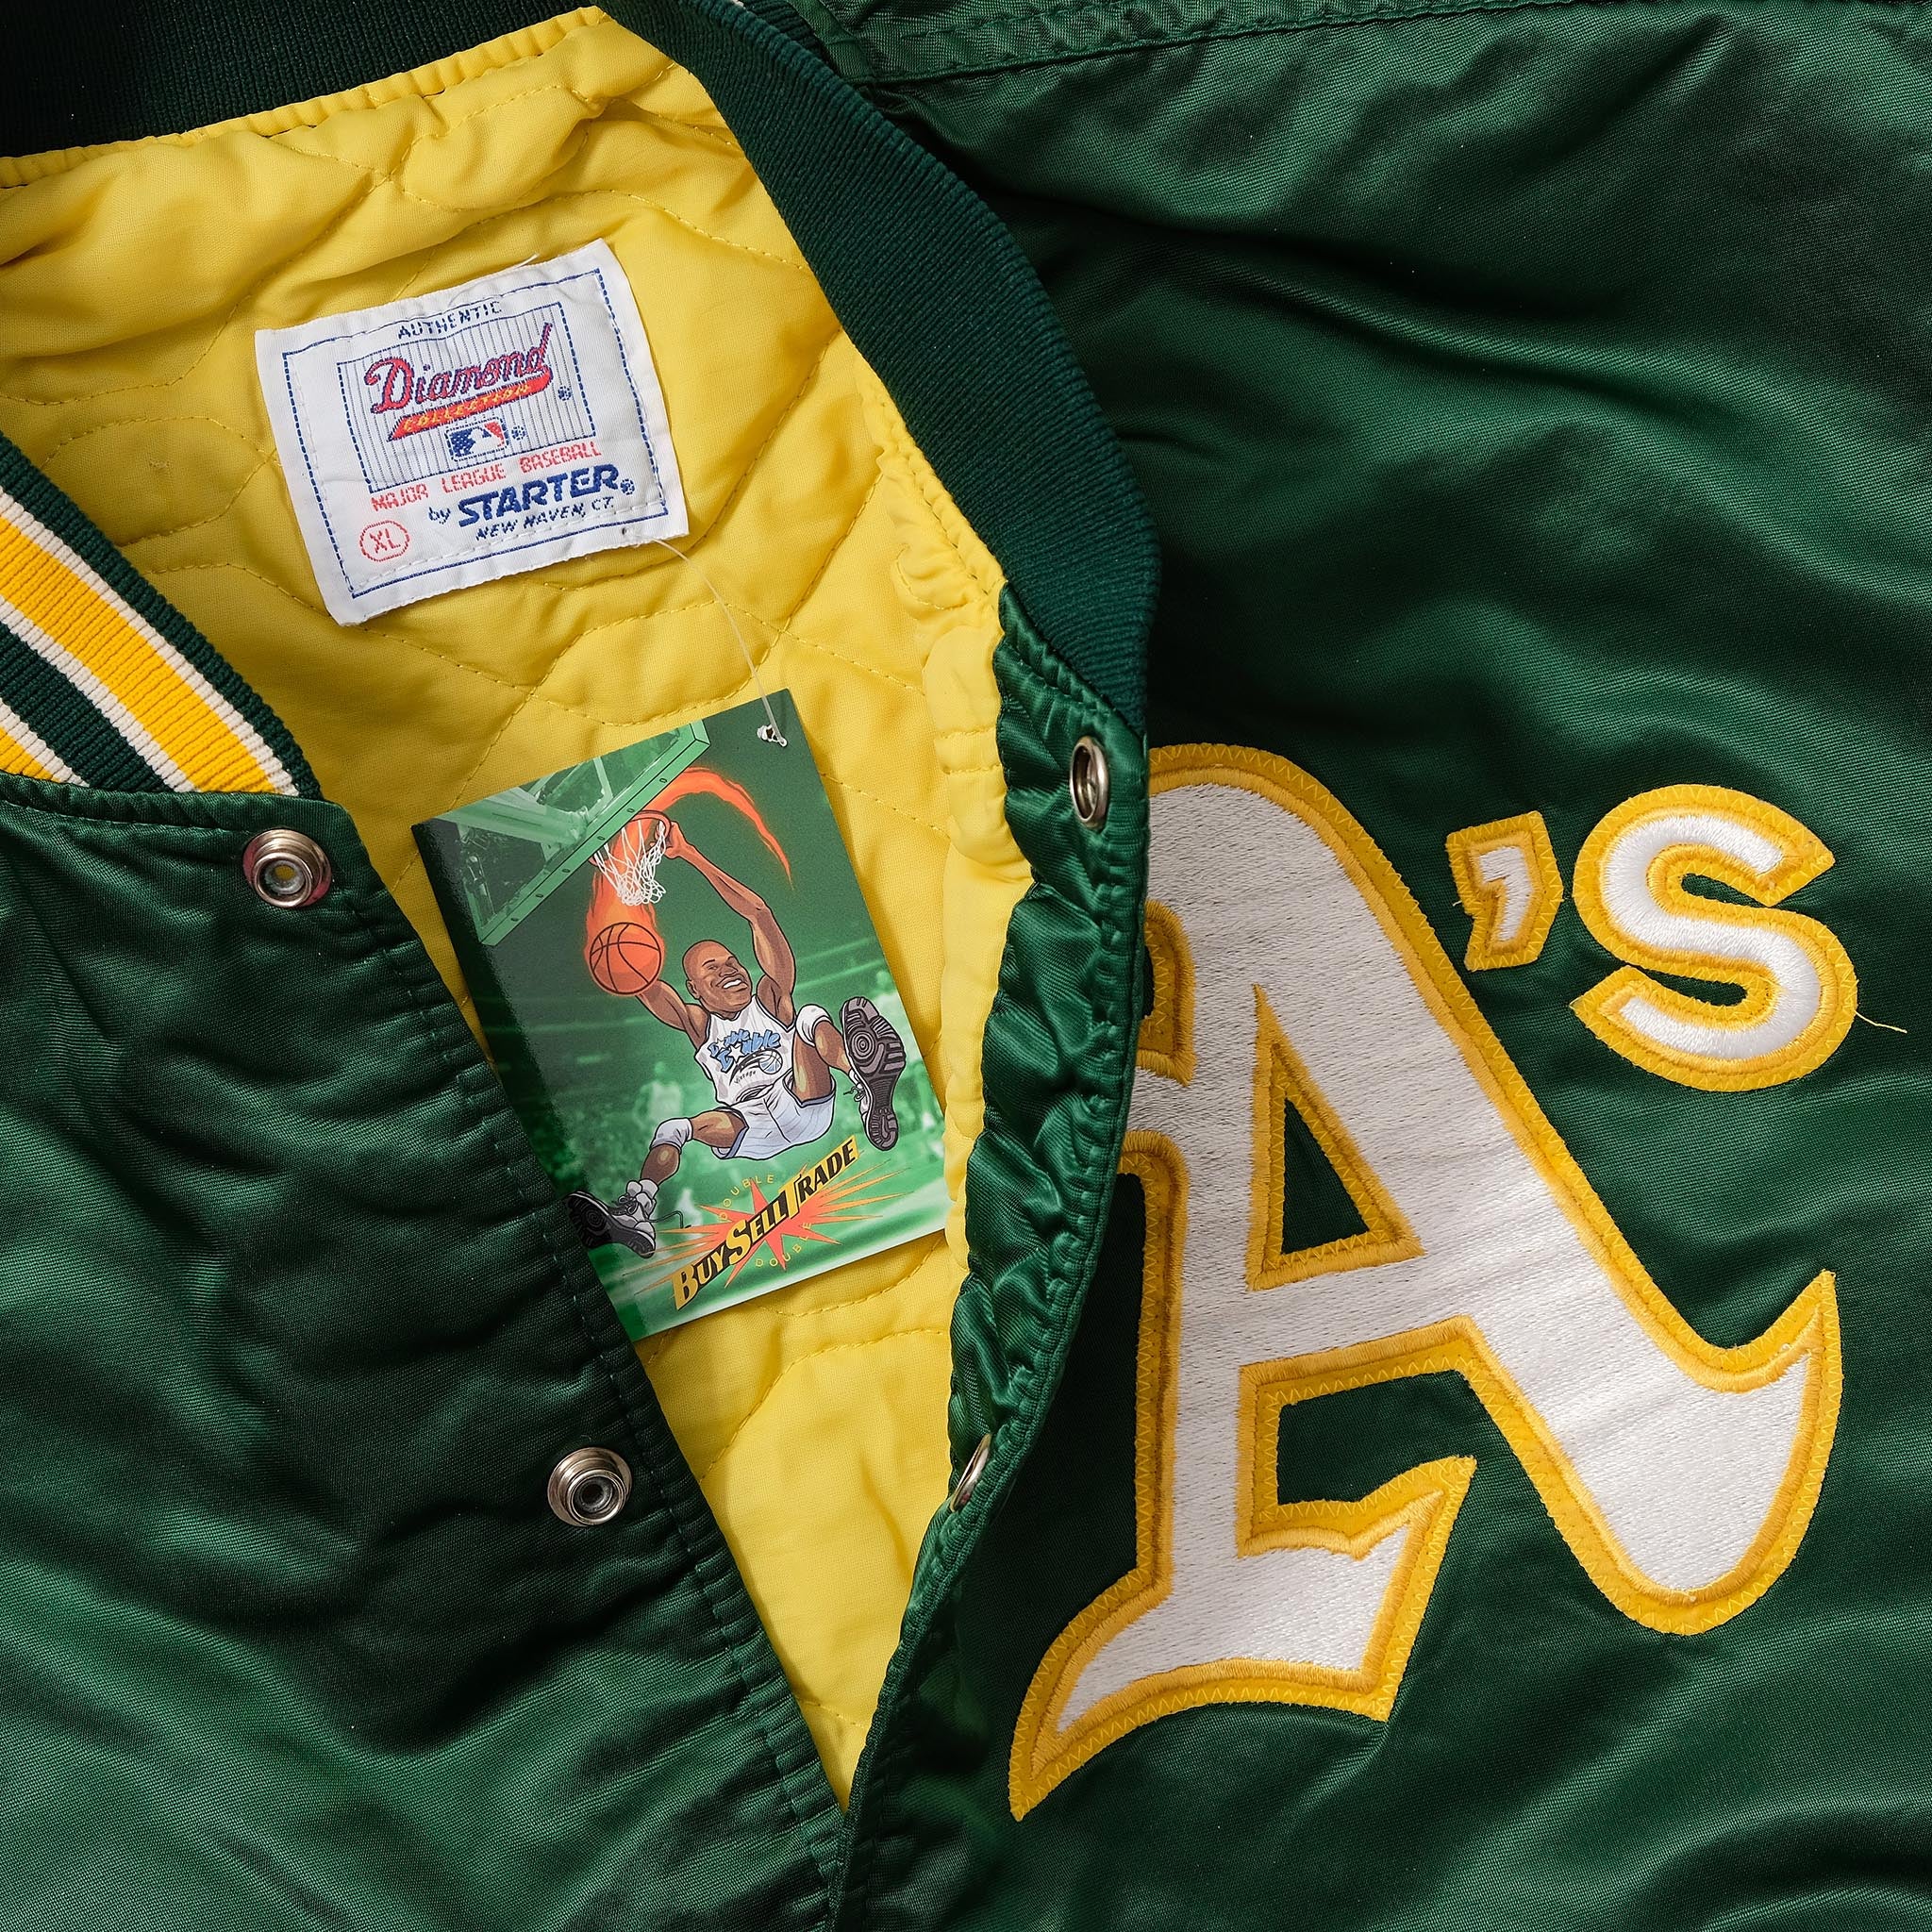 Vintage 90s Oakland Athletics A's Satin Jacket by Starter Size XL Green